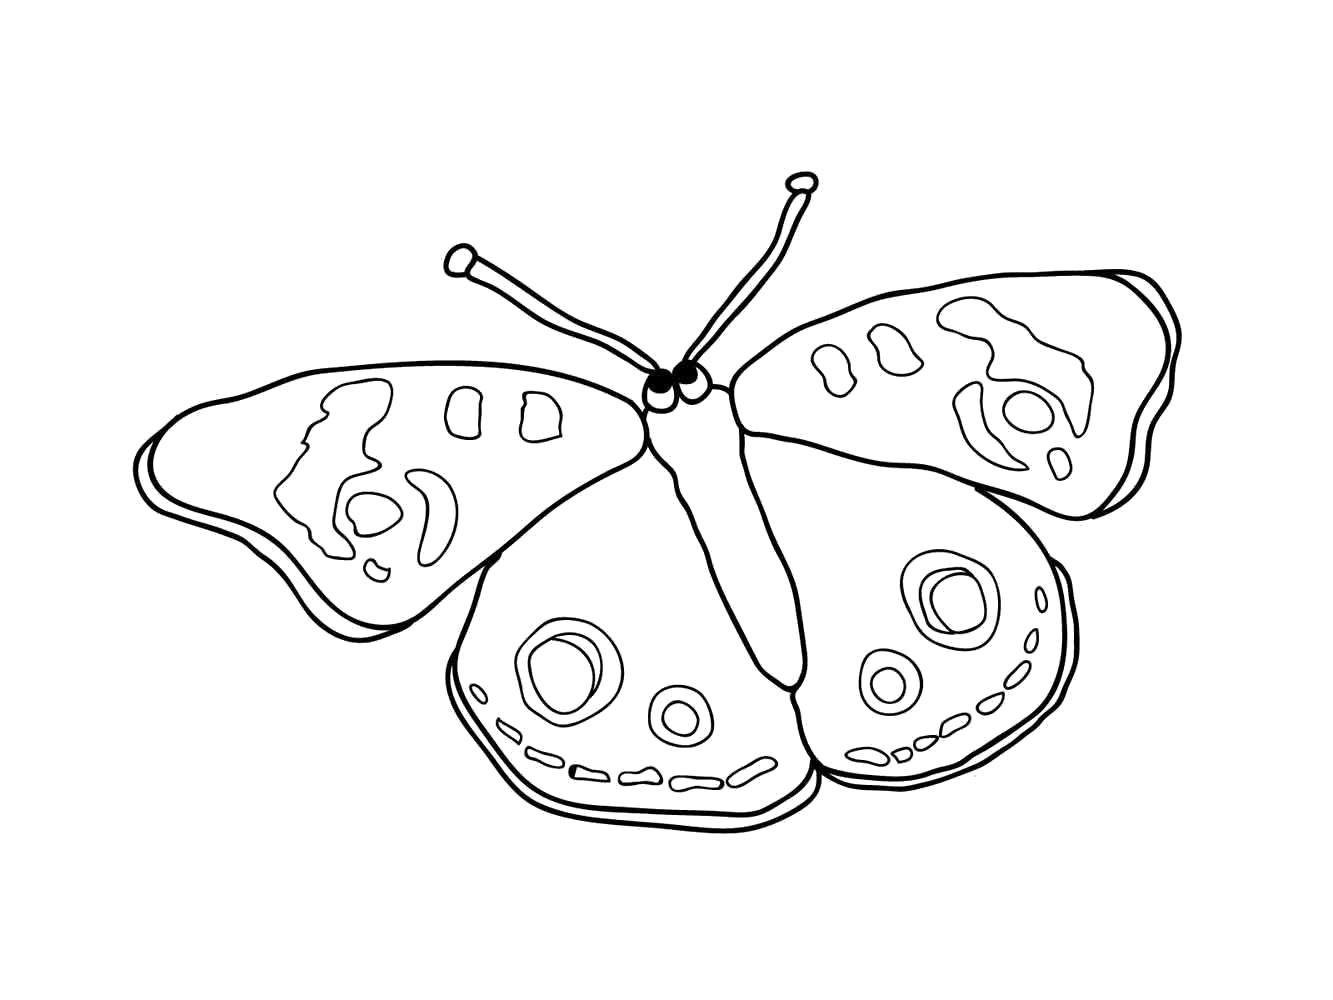 Раскраска бабочка с узорами. Бабочки